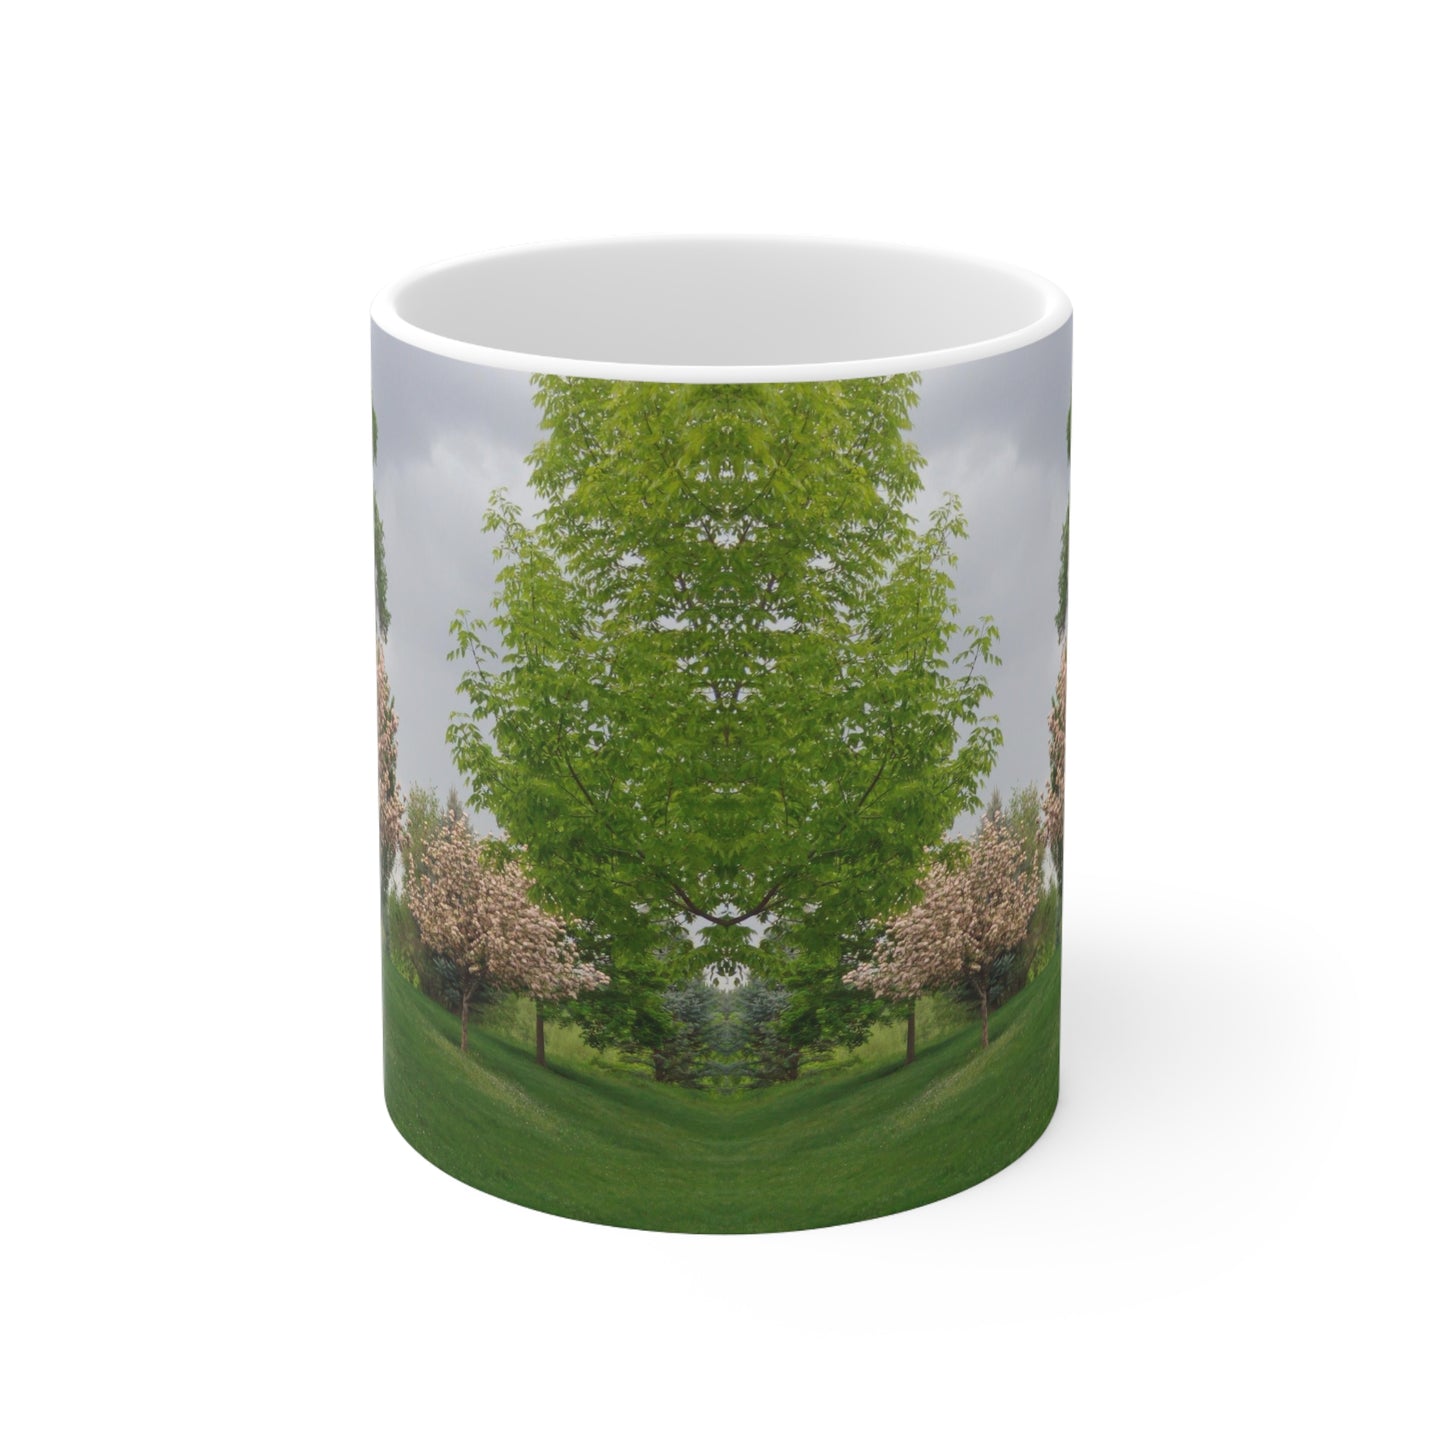 Spring In The Air Ceramic Mug 11oz